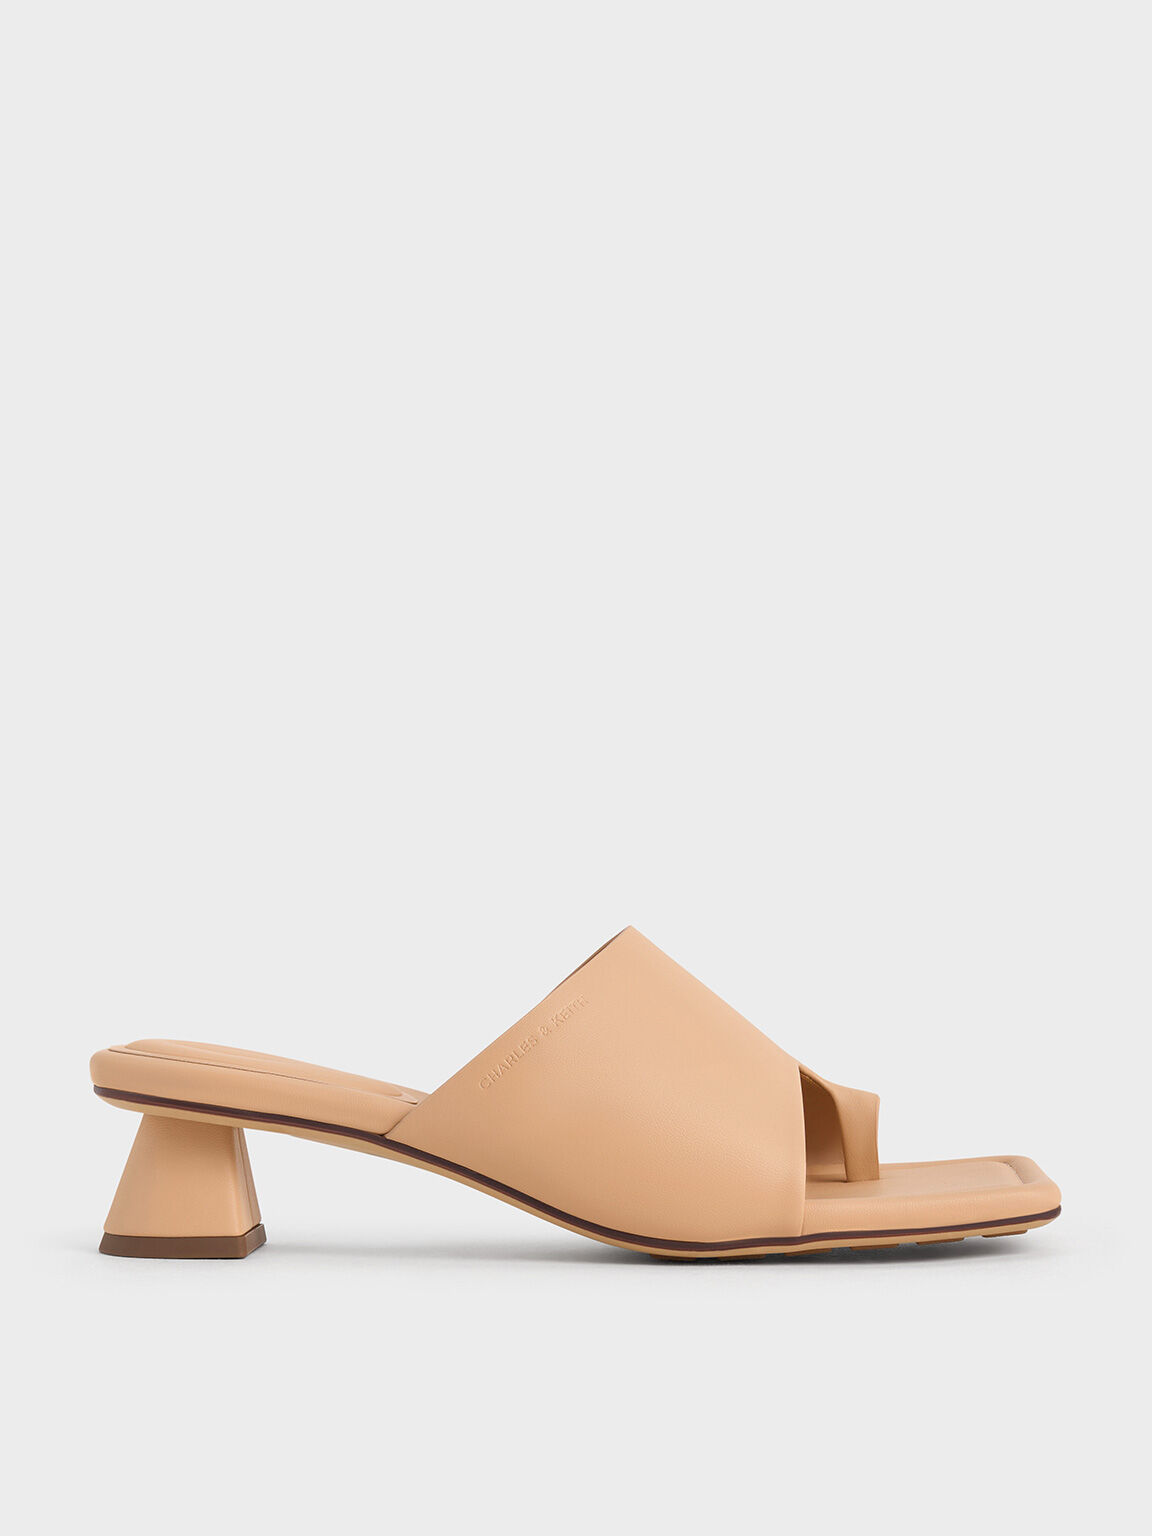 Asymmetric Square-Toe Toe-Ring Sandals, Nude, hi-res